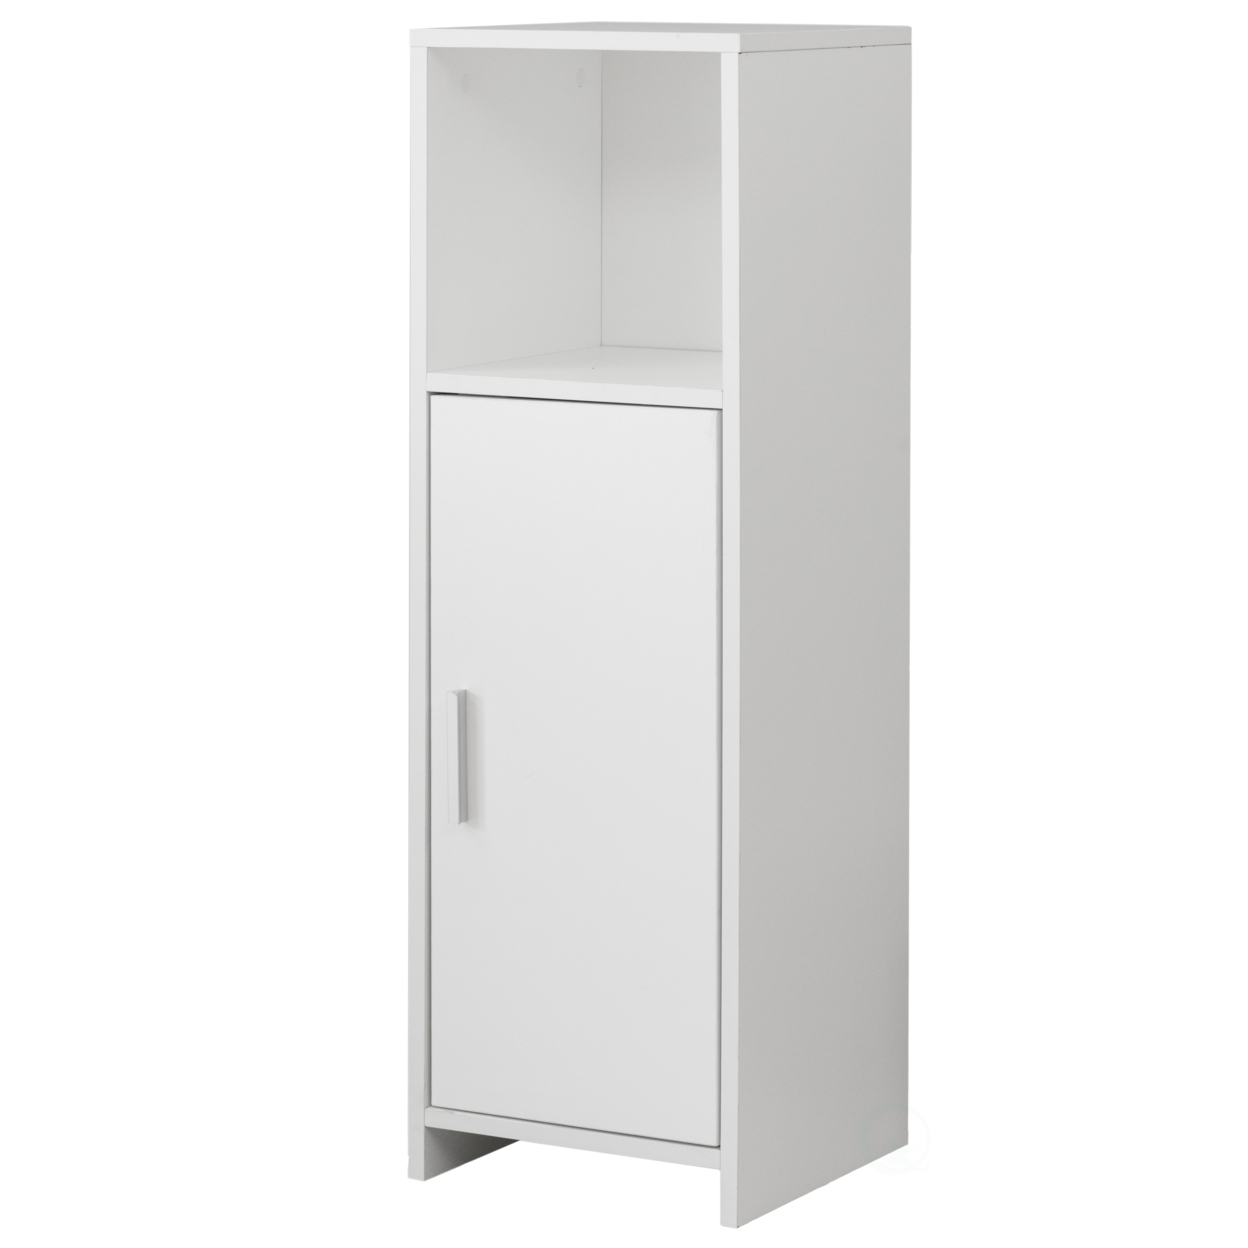 Wooden Home Tall Freestanding Bathroom Vanity Linen Tower Organizer Cabinet, White